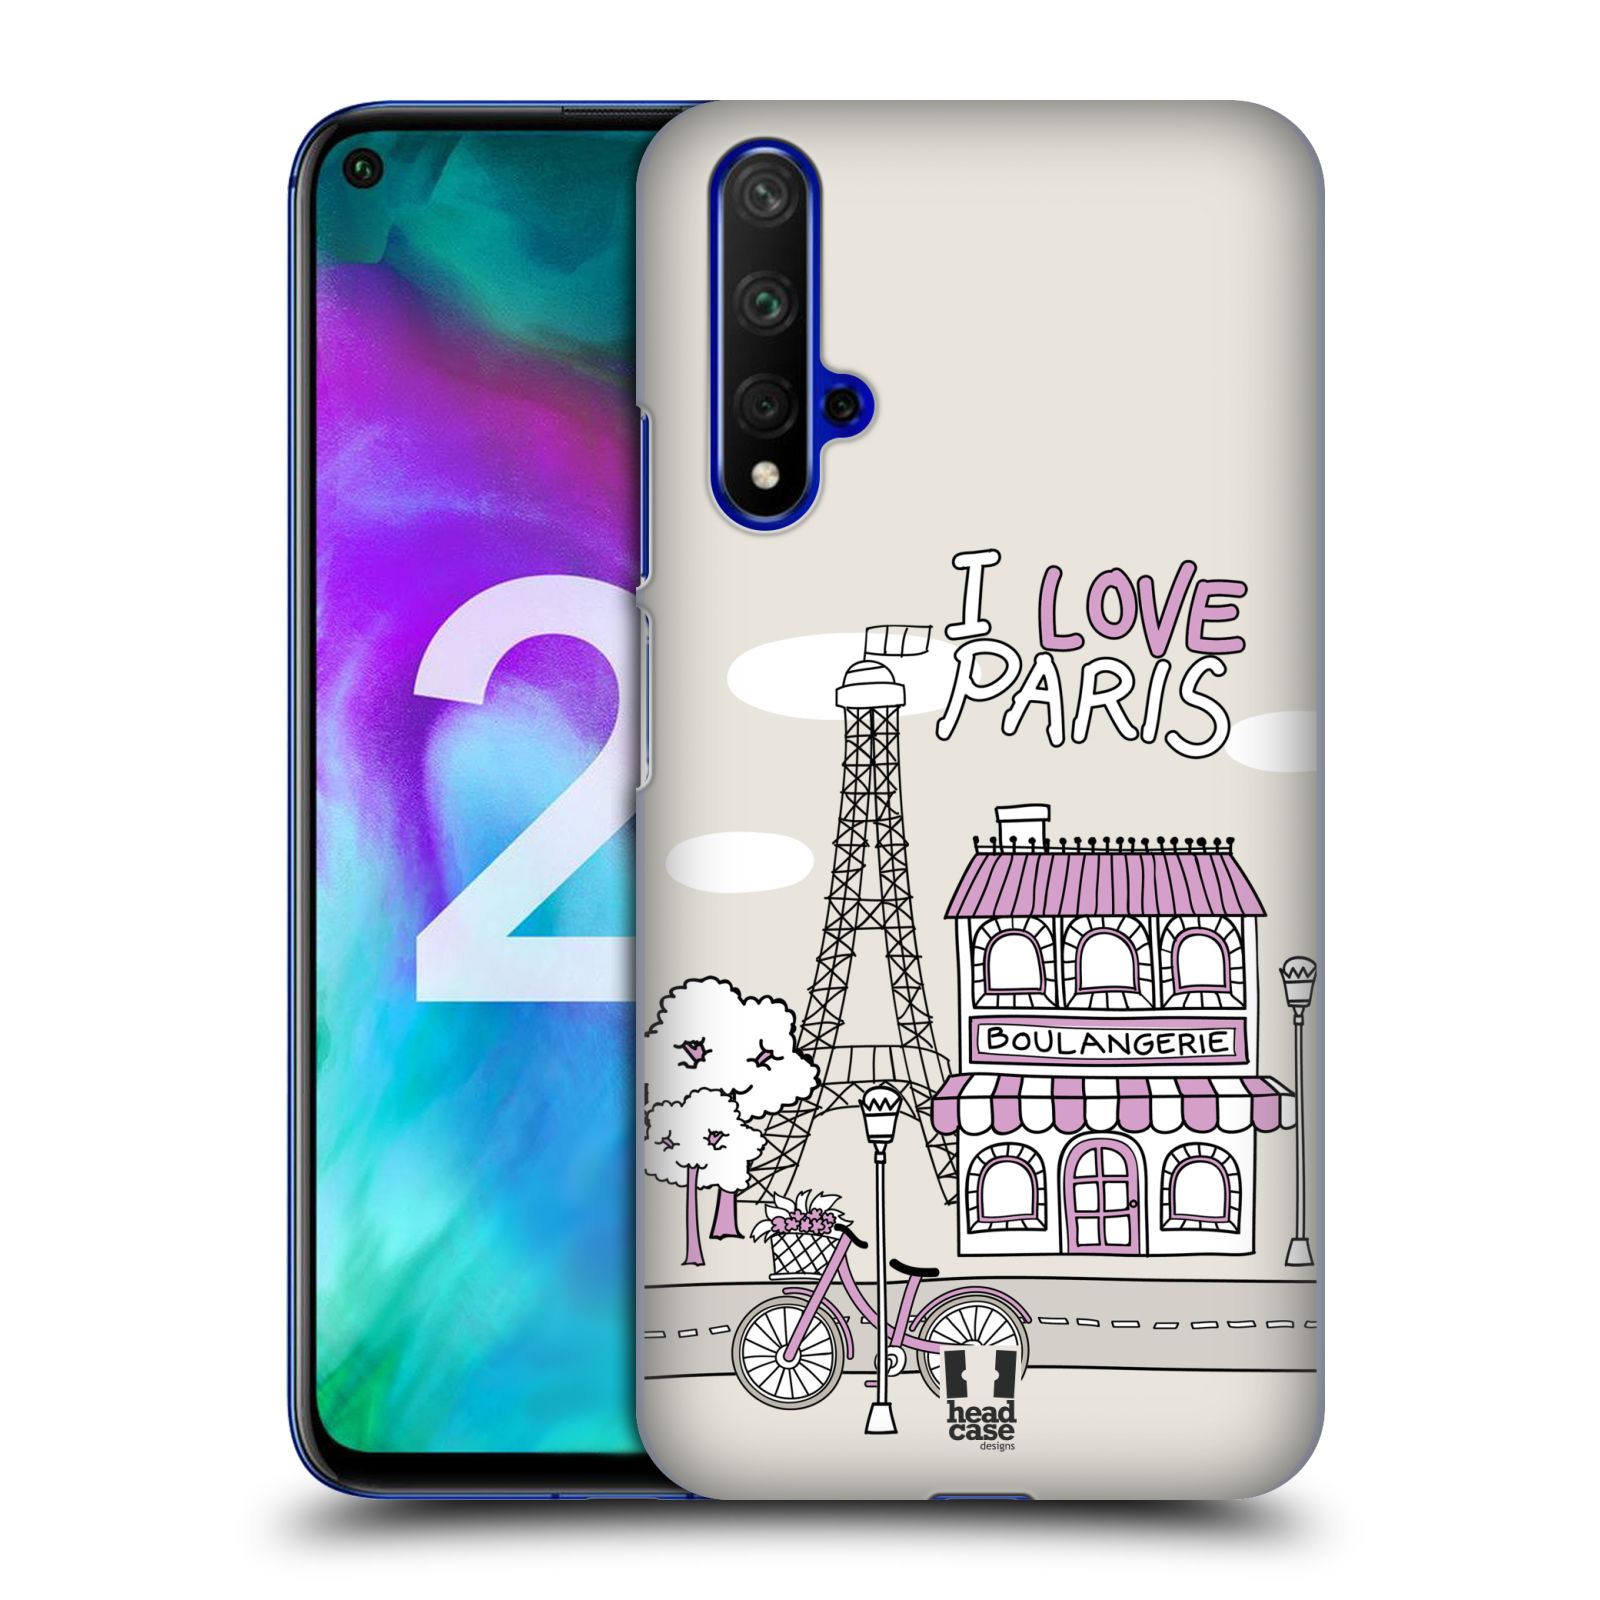 Pouzdro na mobil Honor 20 - HEAD CASE - vzor Kreslená městečka FIALOVÁ, Paříž, Francie, I LOVE PARIS